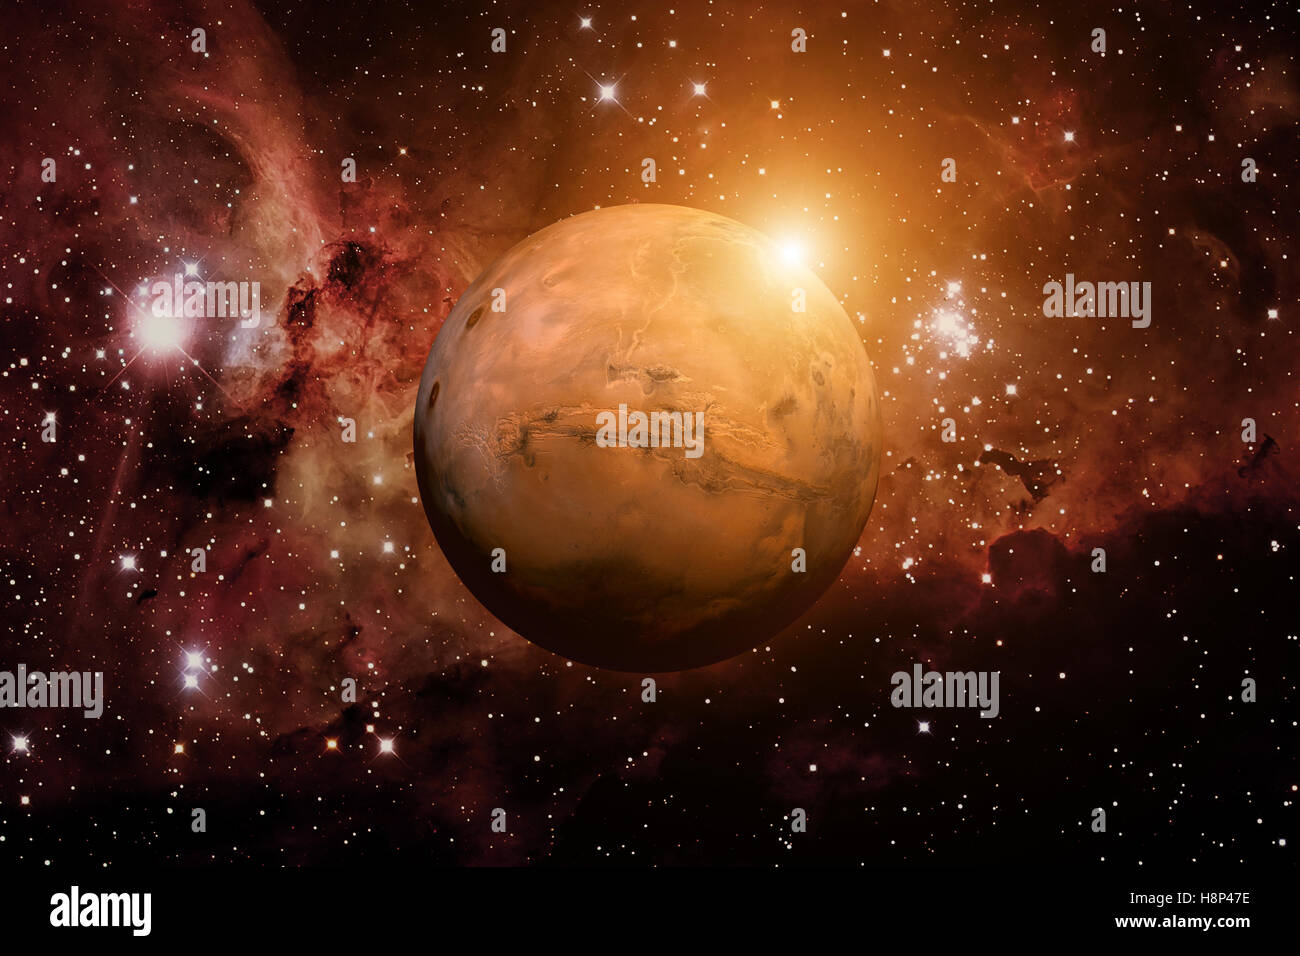 El planeta Marte. La nebulosa en el fondo. Foto de stock